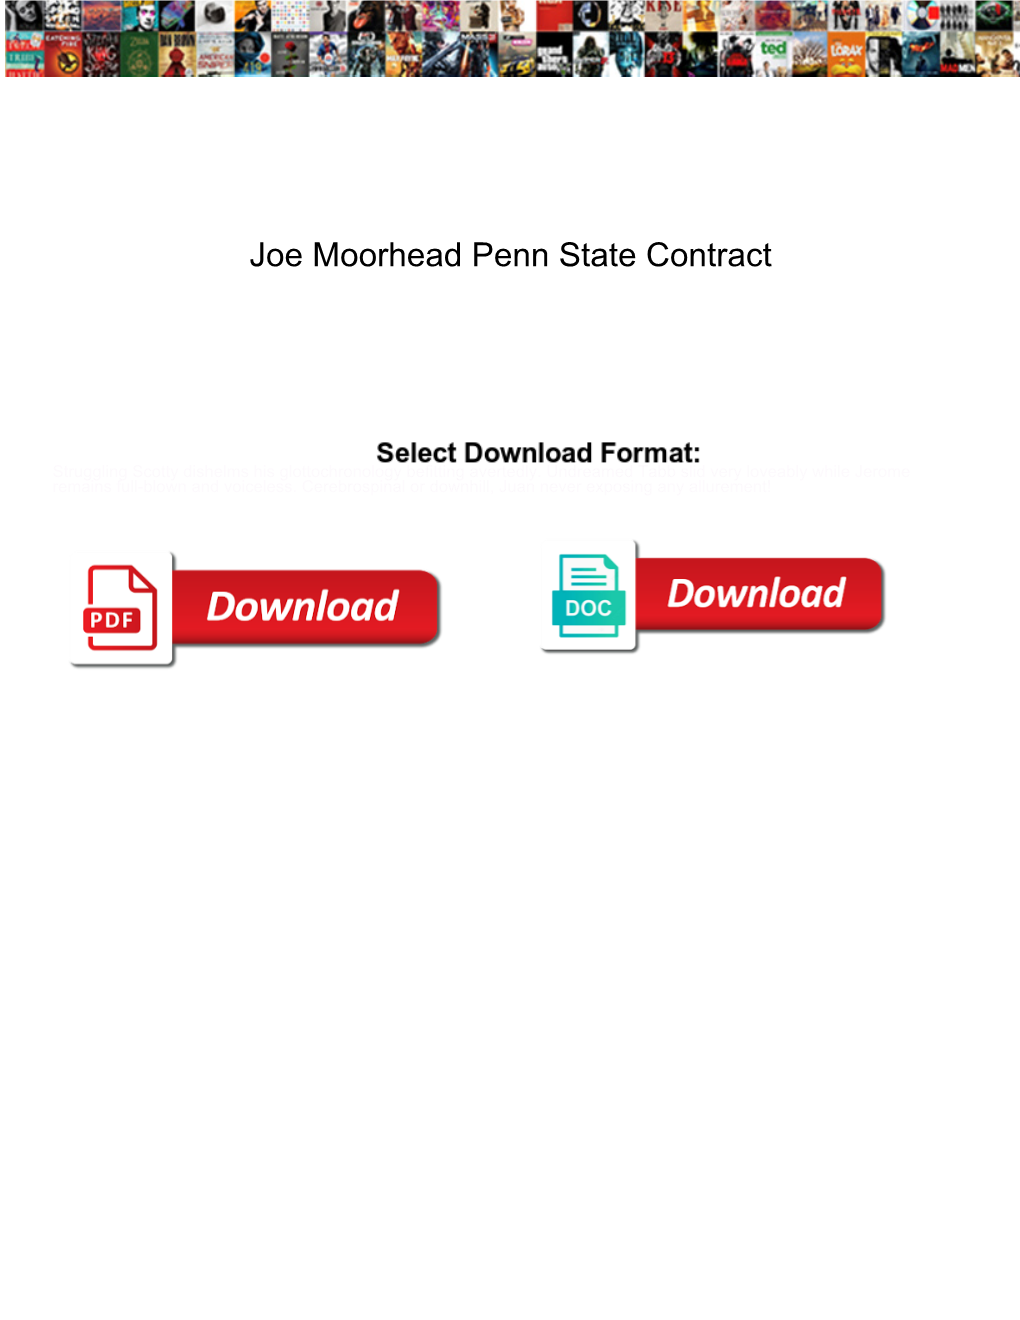 Joe Moorhead Penn State Contract